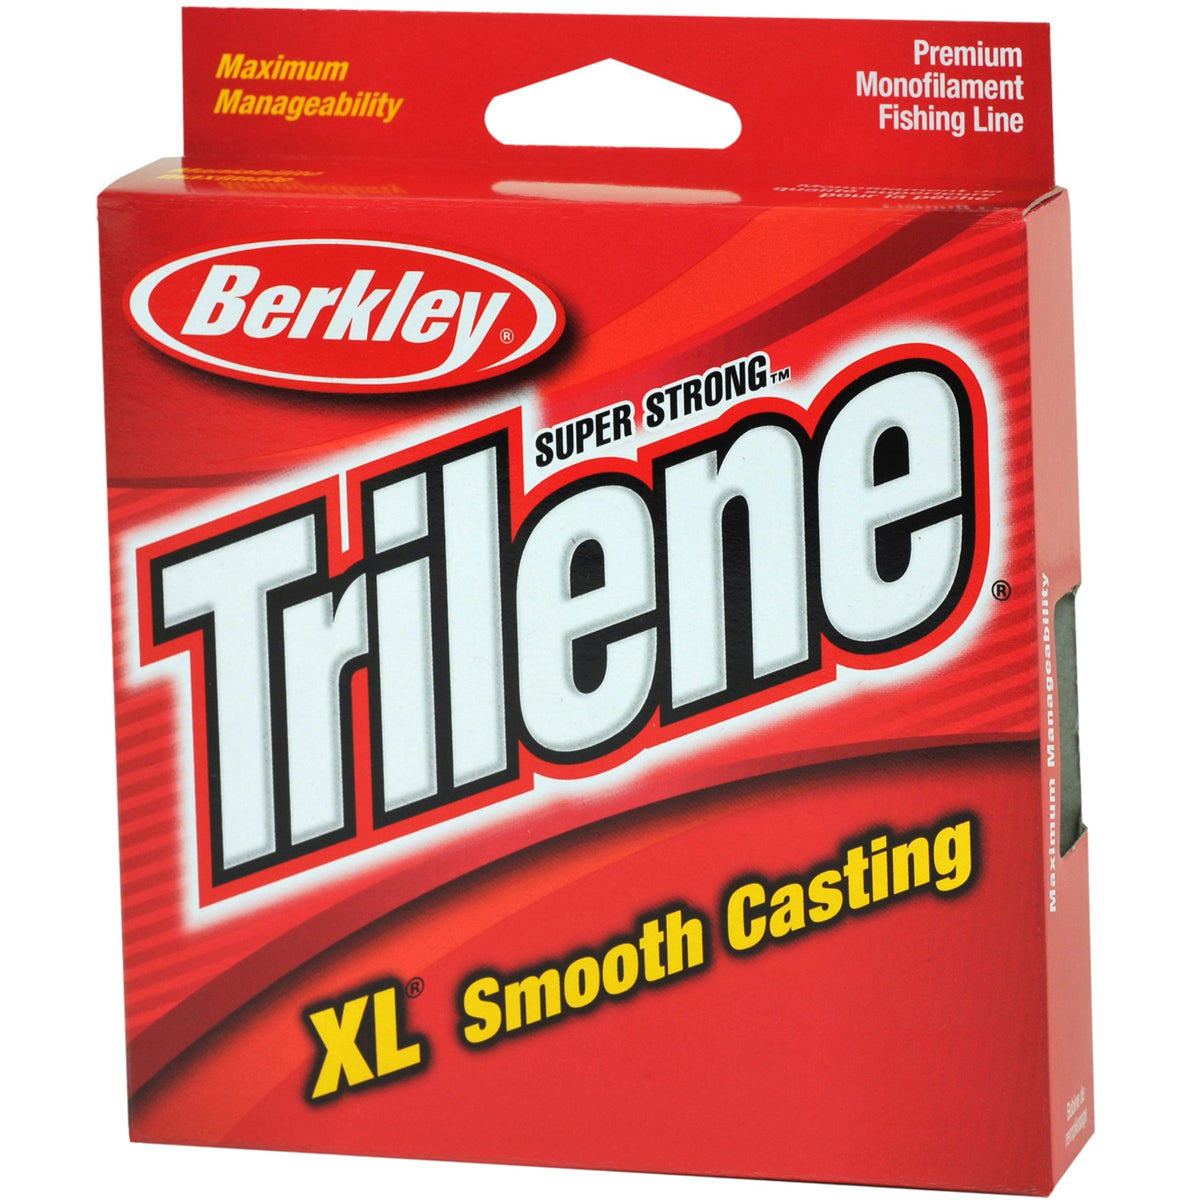 Berkley Trilene XL Smooth Casting Fishing Line (110 yds) - Clear